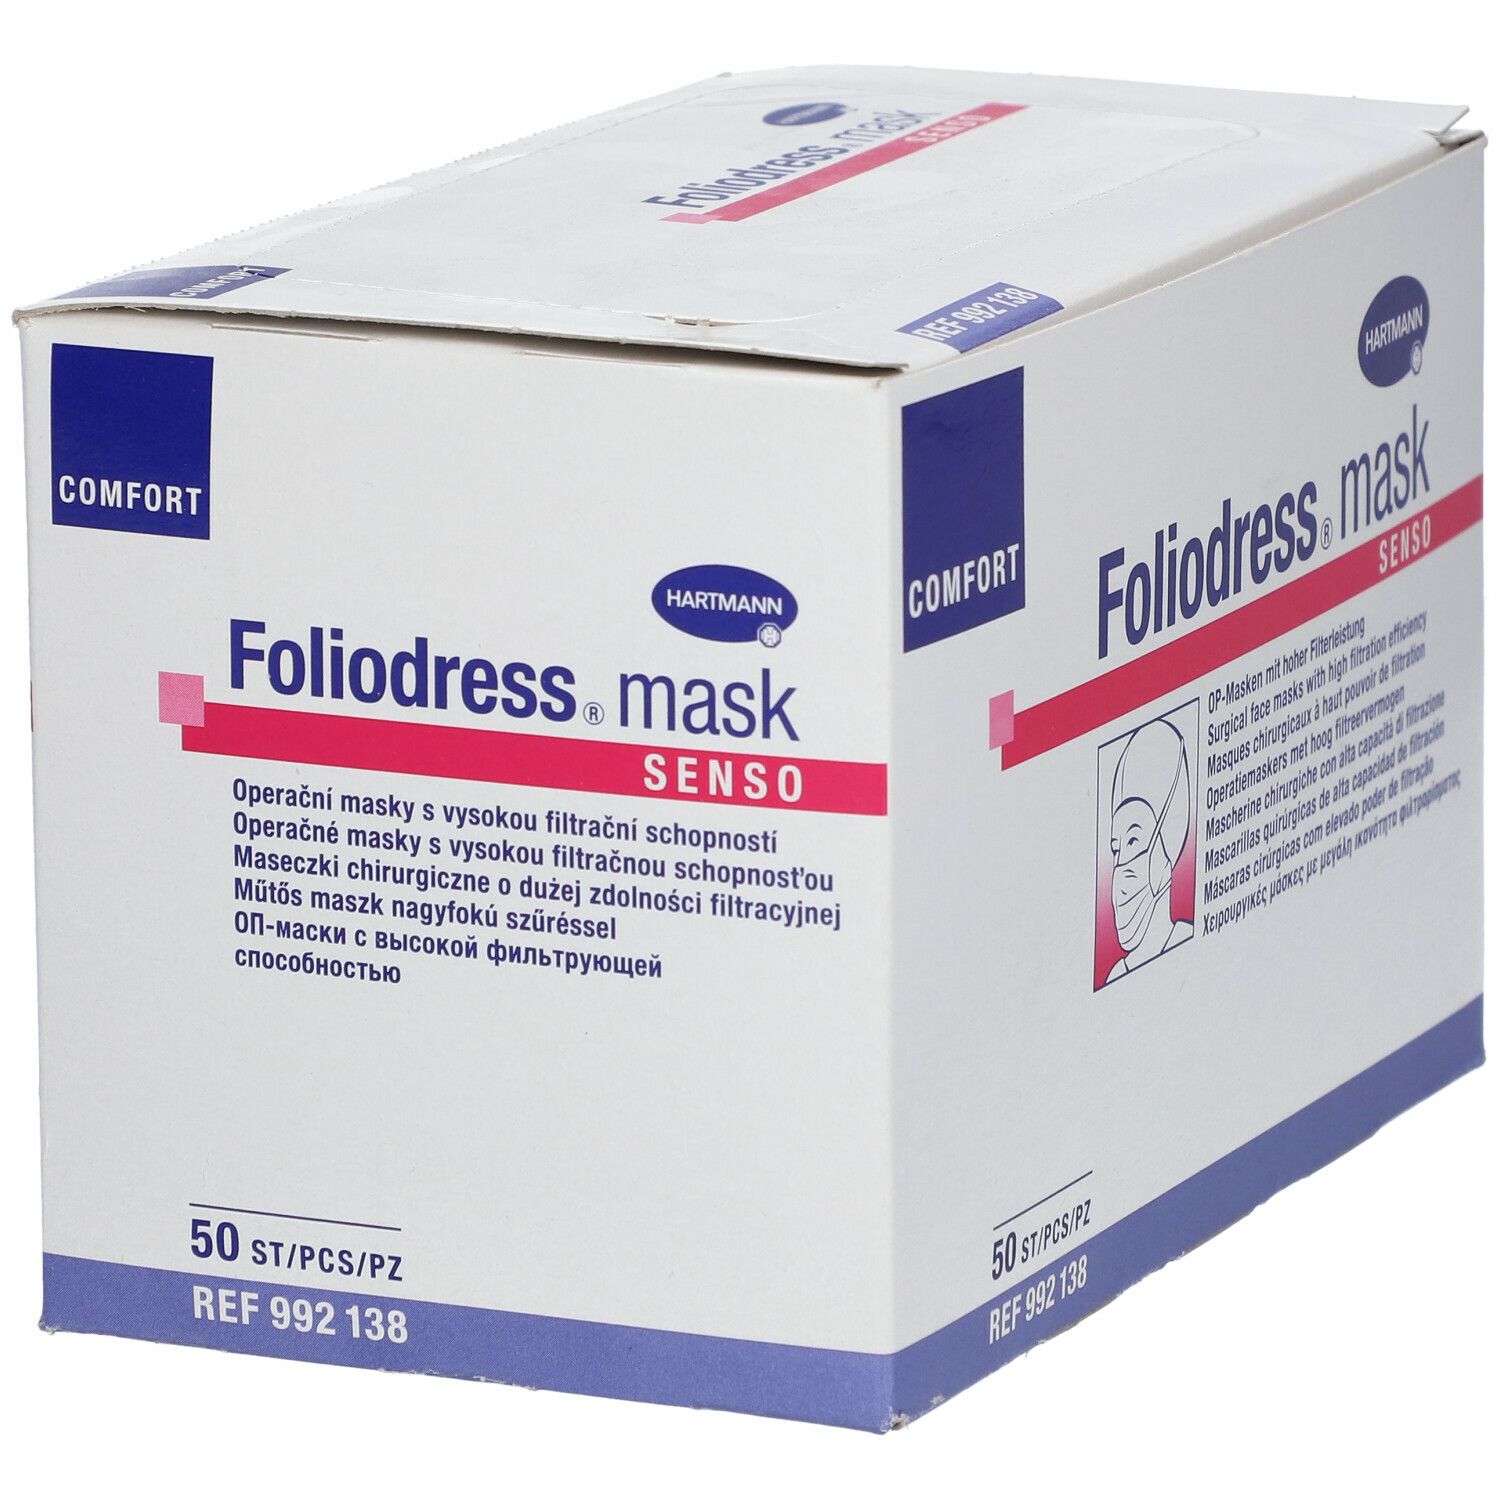 Foliodress® Mask Comfort